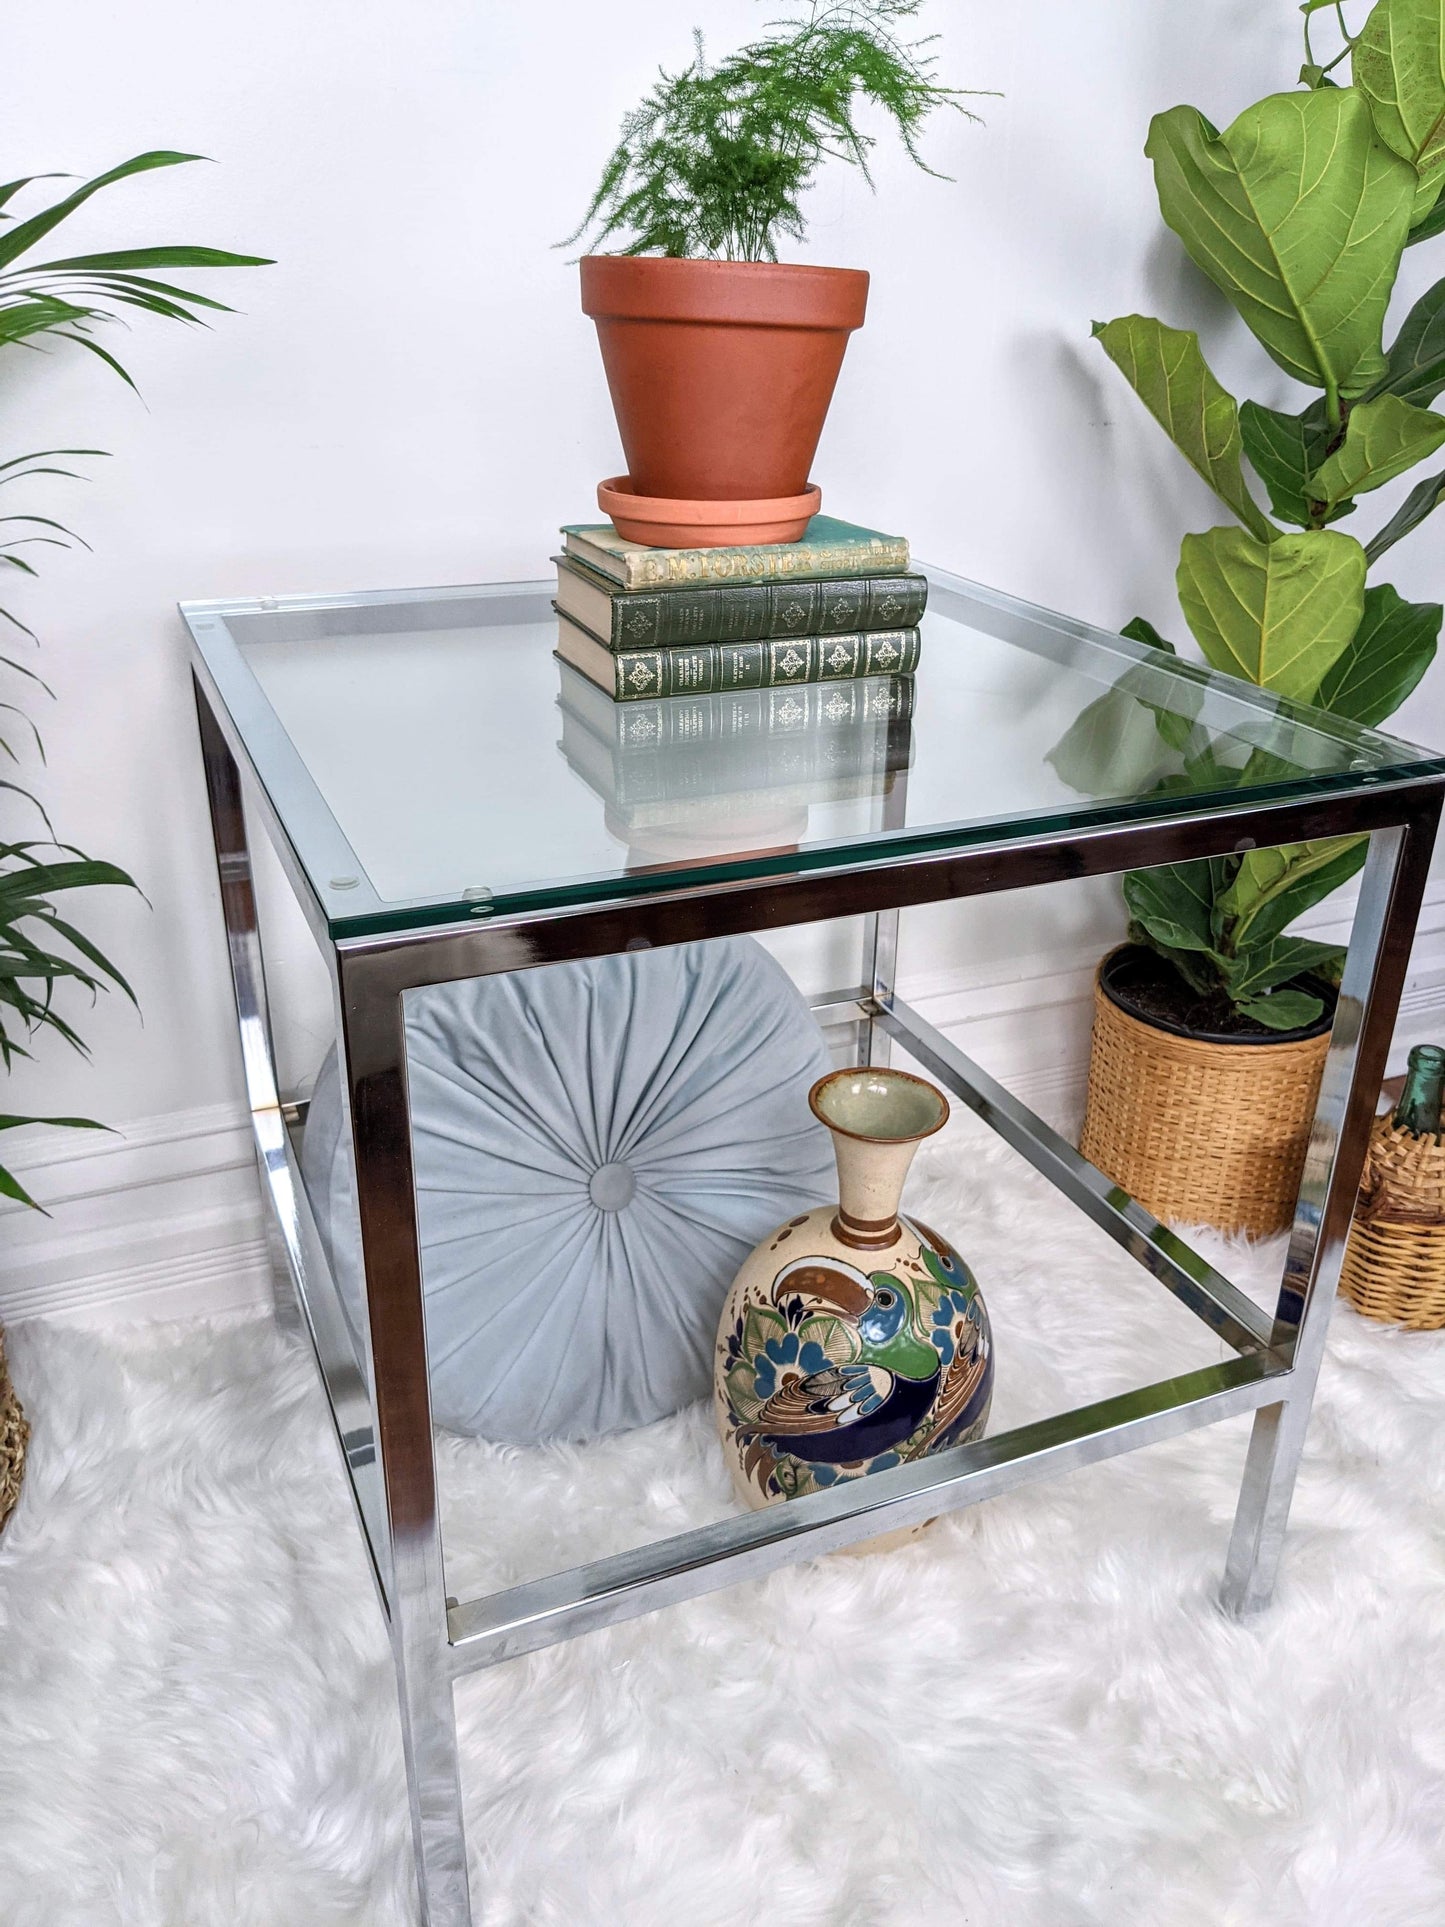 The Chrometastic Glass Table